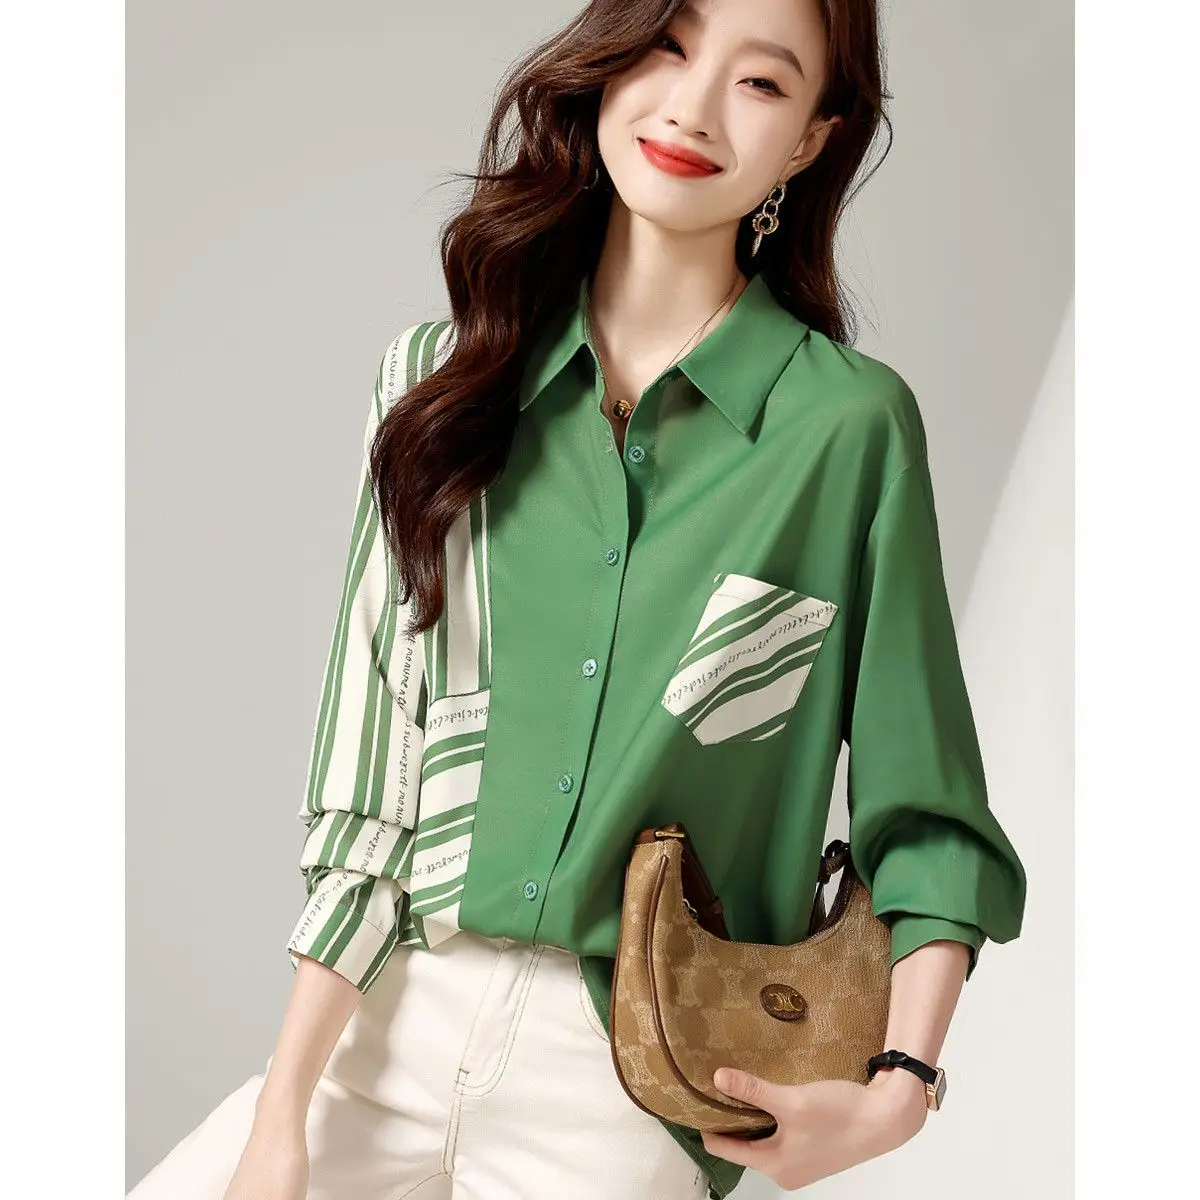 Ladies Patchwork Color Print Shirt Spring Korean Fashion Simple All-match Blouse Female Clothes Chic Vintage Elegant Casual Top